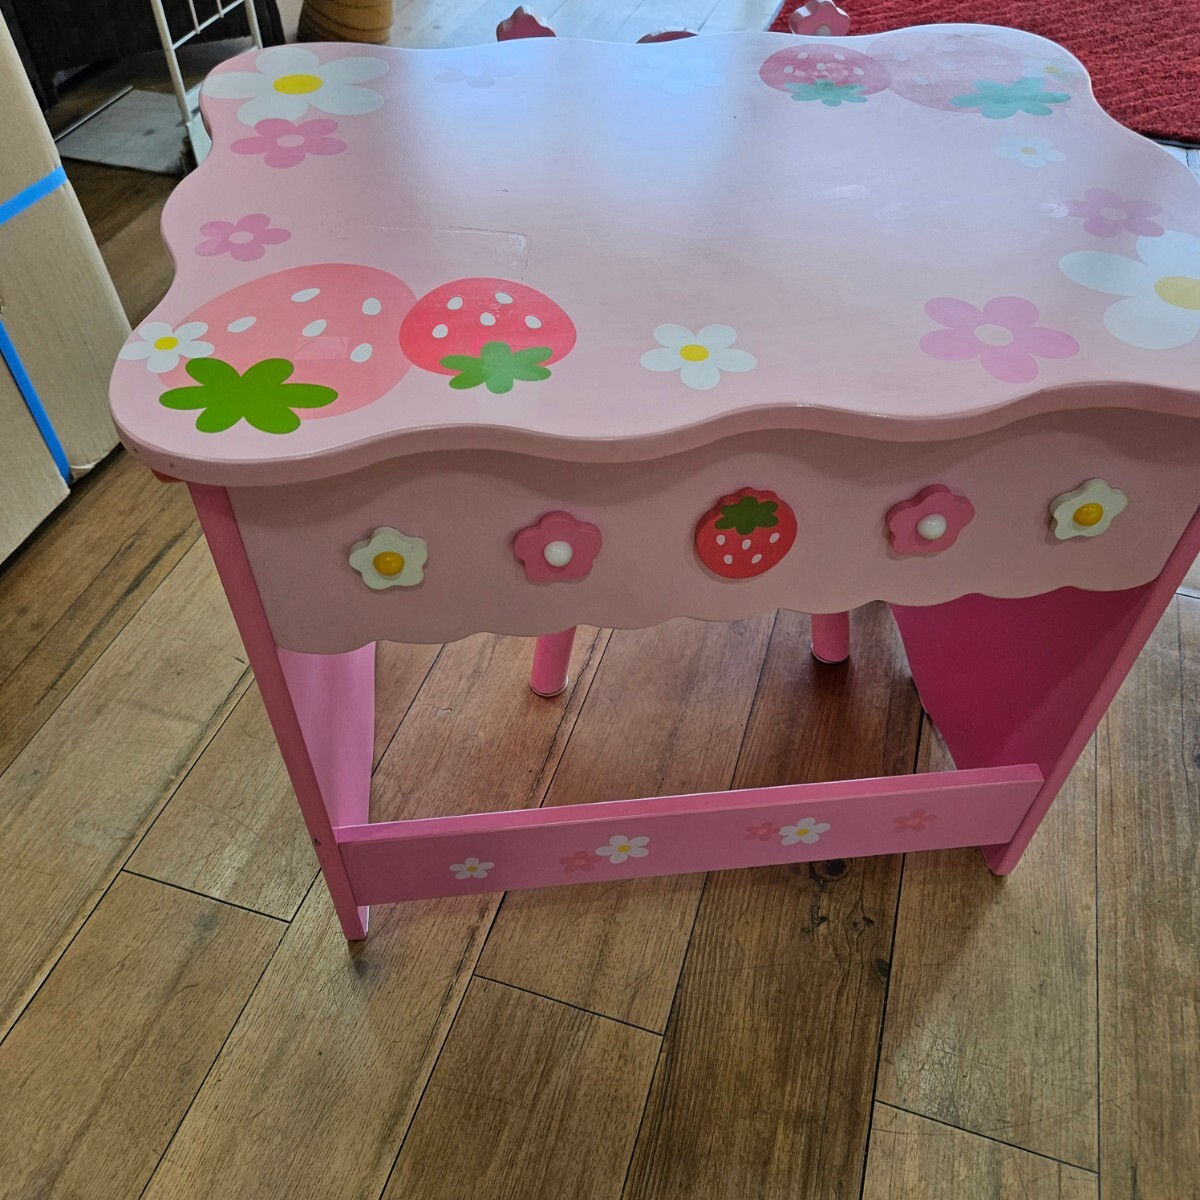  mother garden writing desk strawberry pattern desk chair set pink child desk used collection interior 